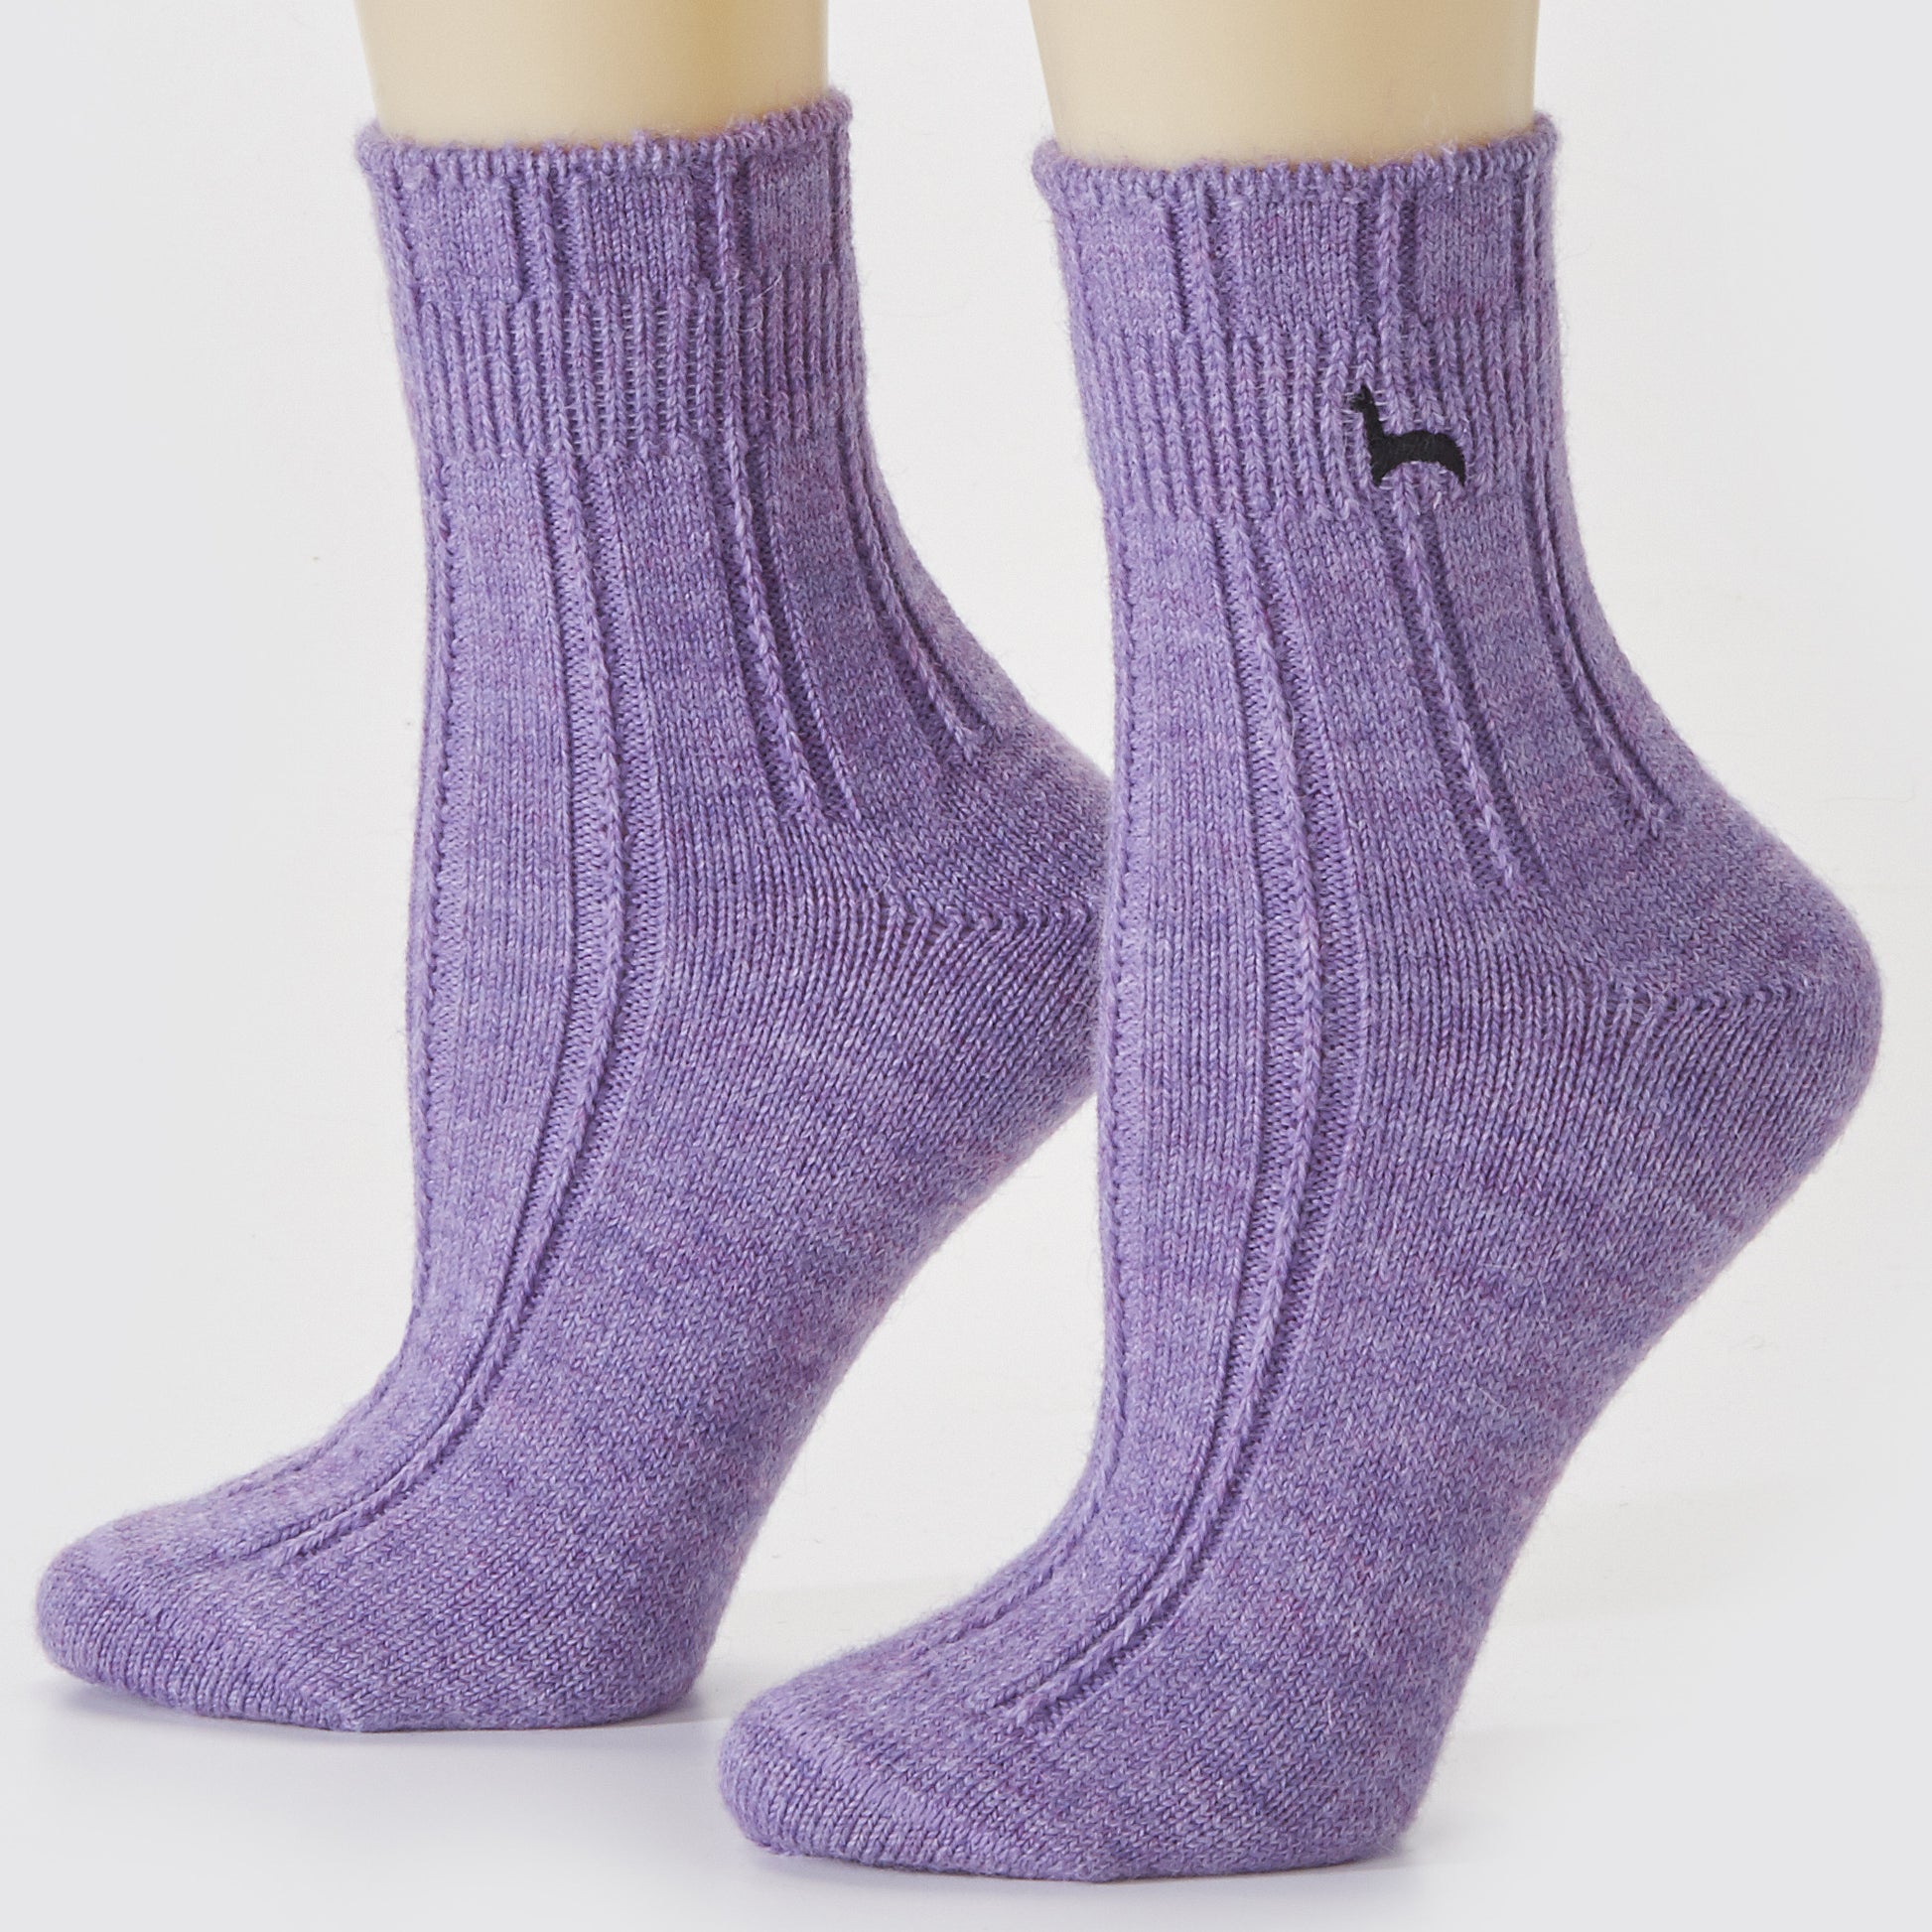 Alpaca Bed Socks in purple